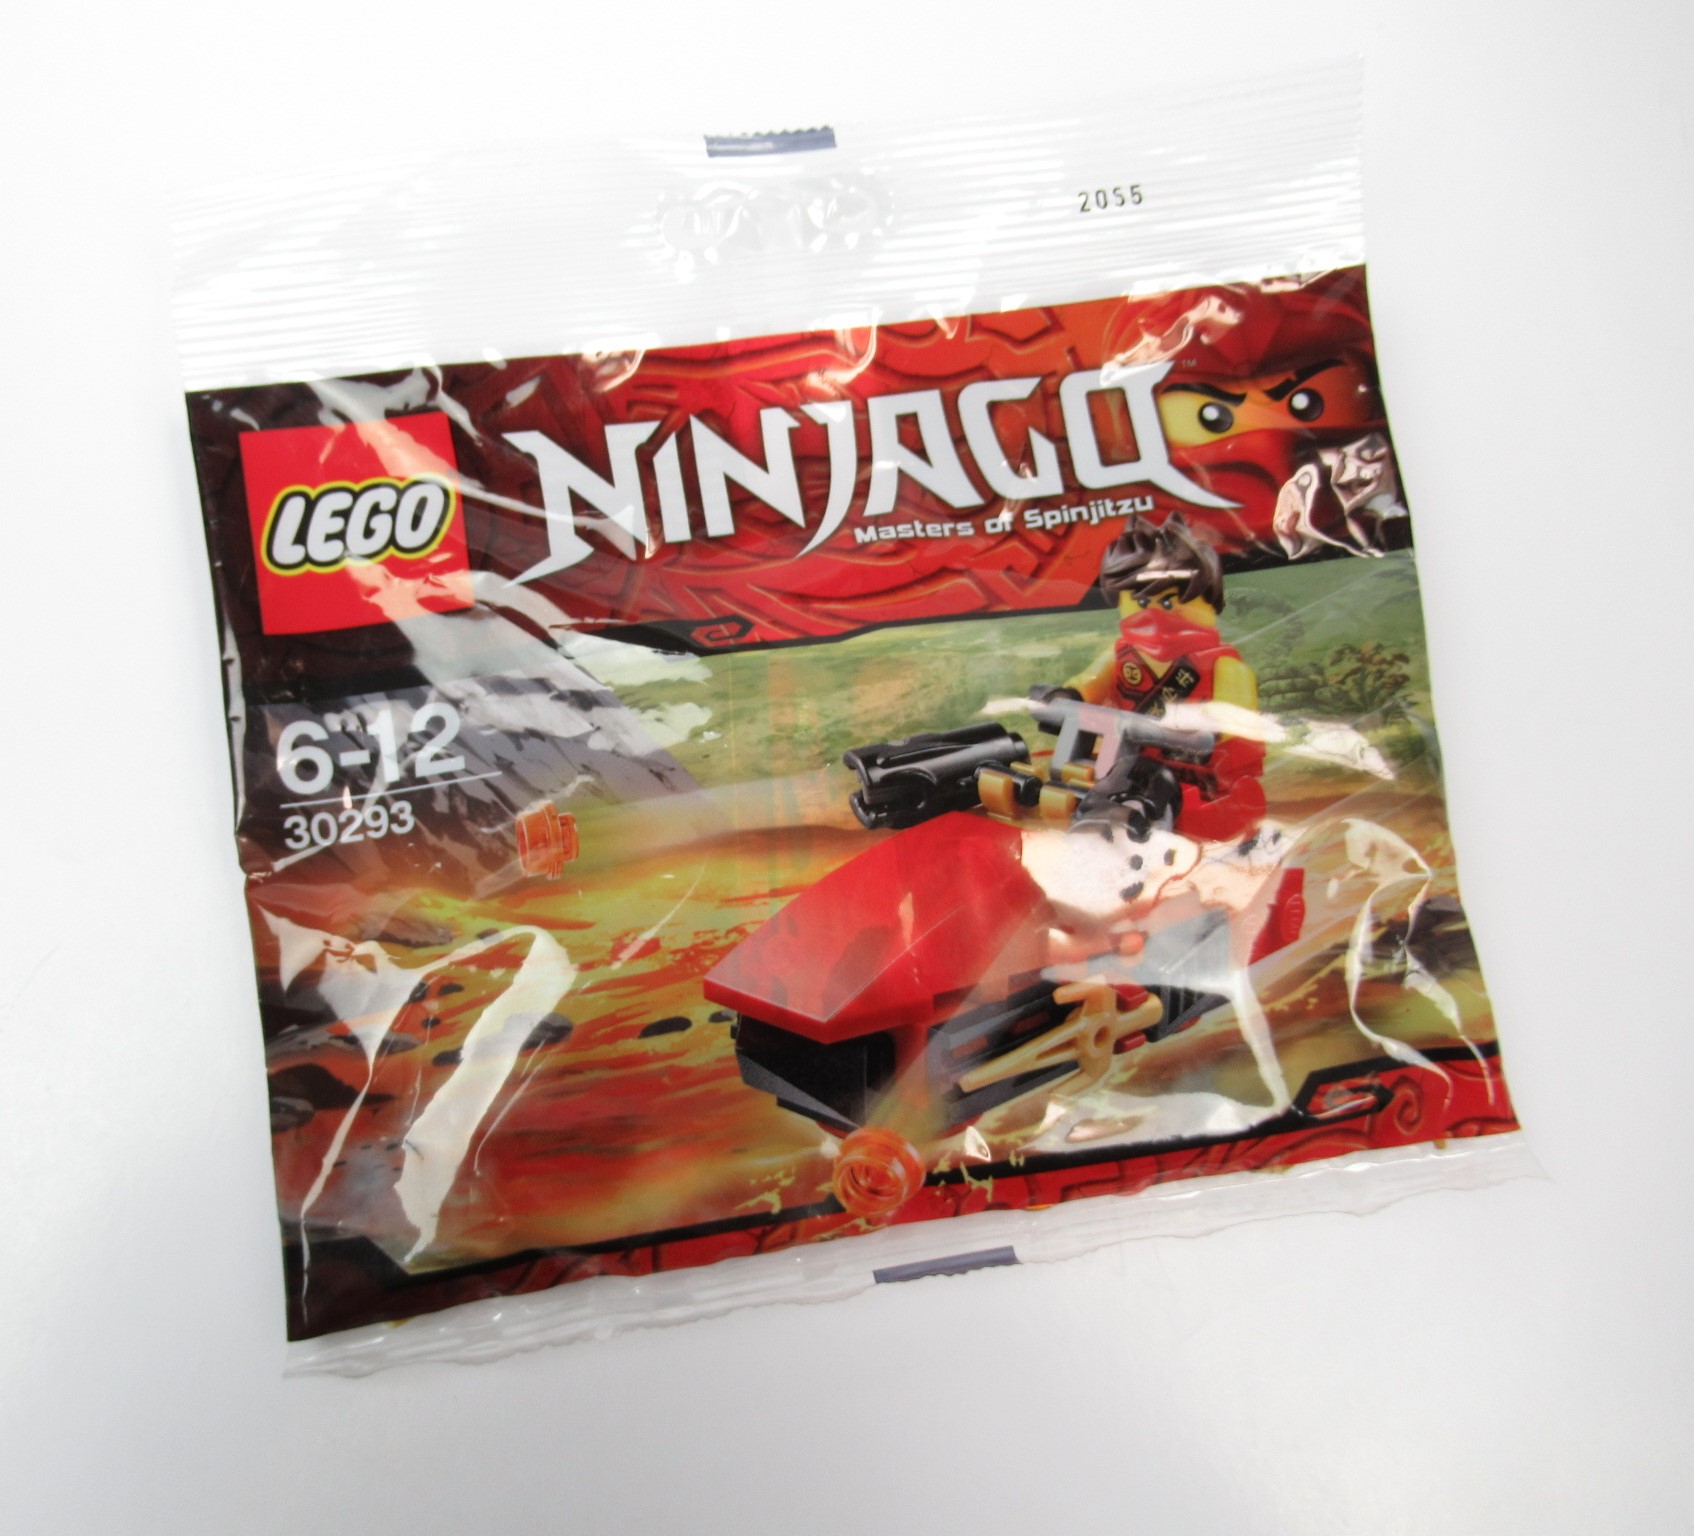 Immagine relativa a LEGO Ninjago 30293: Kai Drifter Polybag